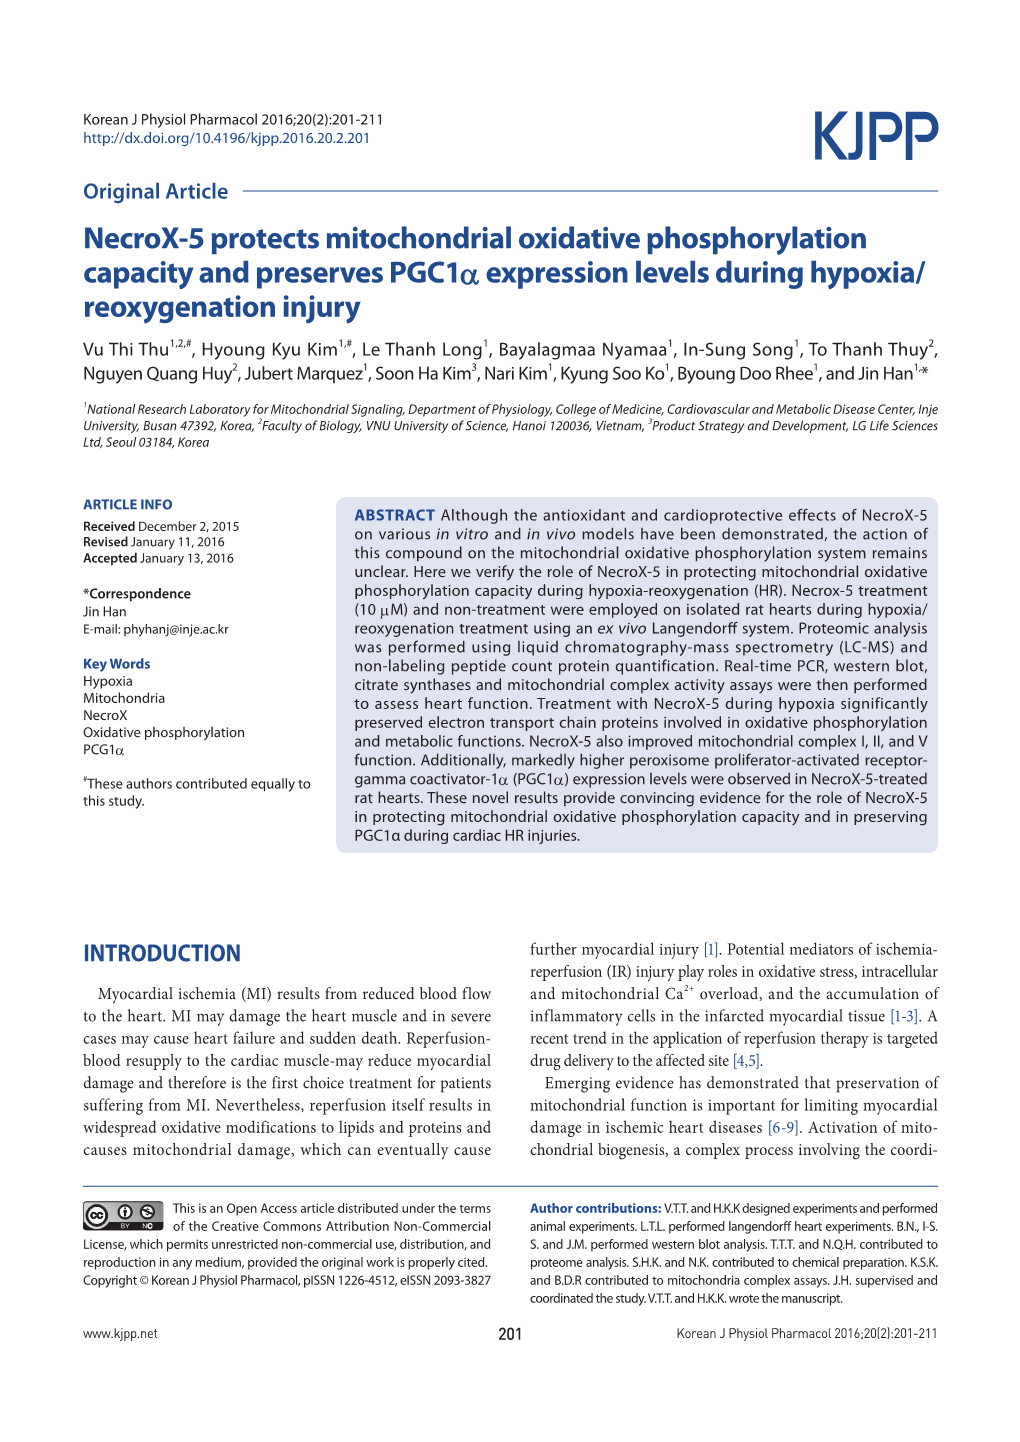 Necrox-5 Protects Mitochondrial Oxidative Phosphorylation Capacity